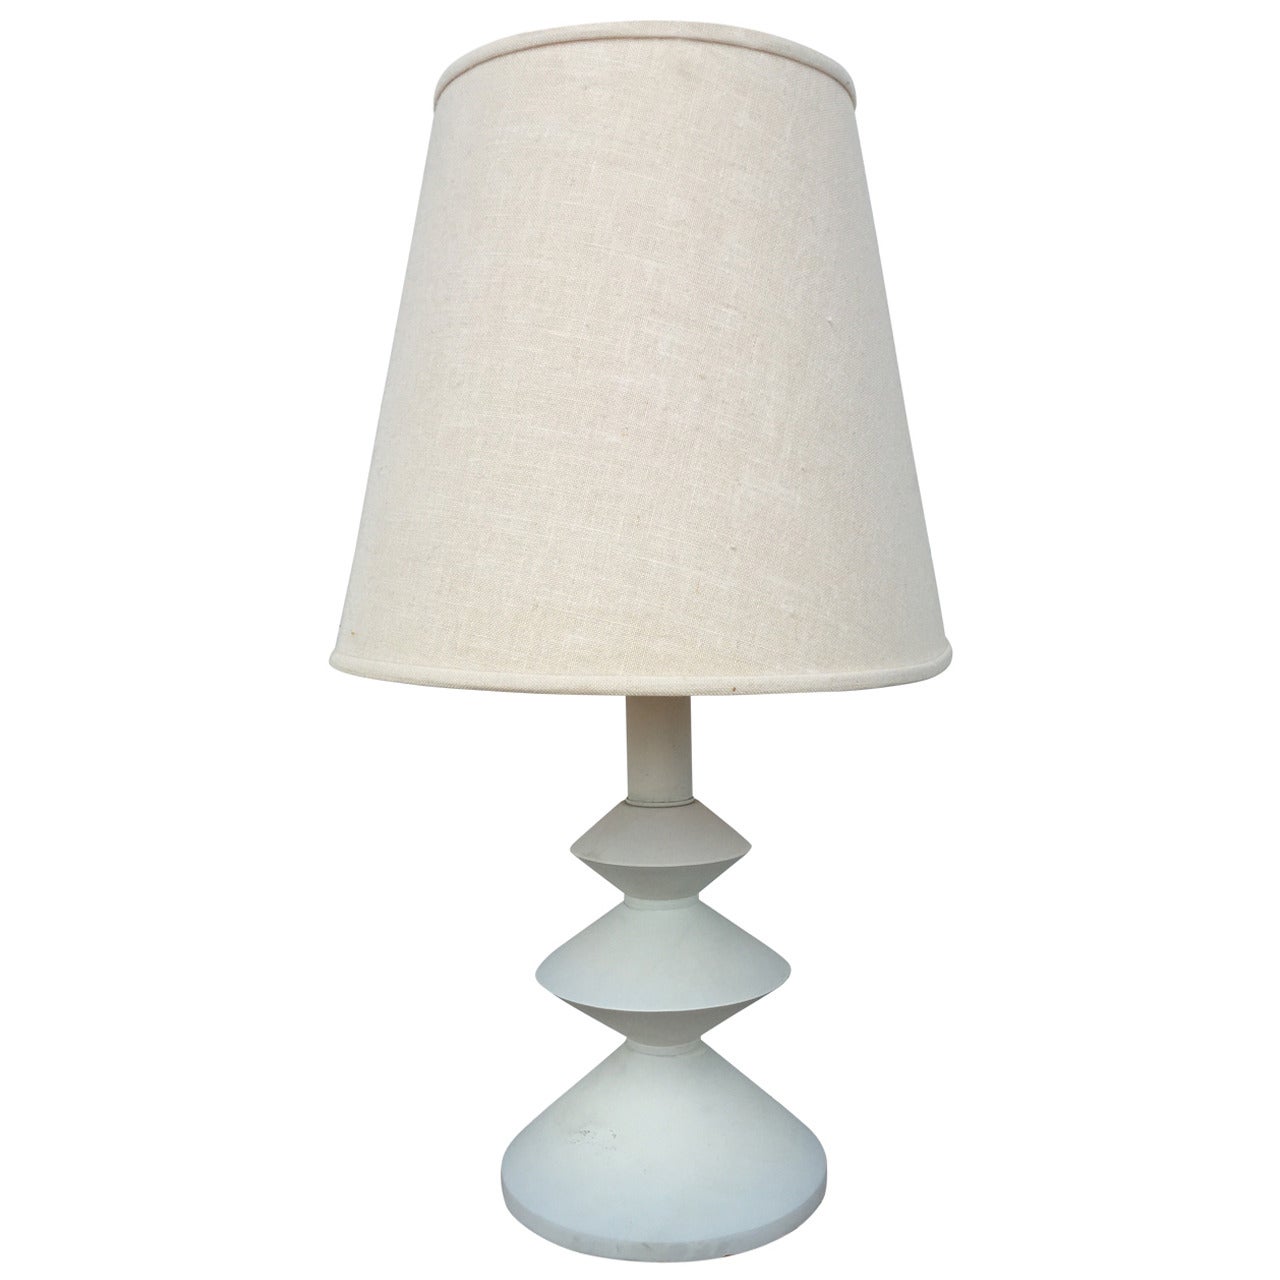 Diego Giacometti Style Lamp